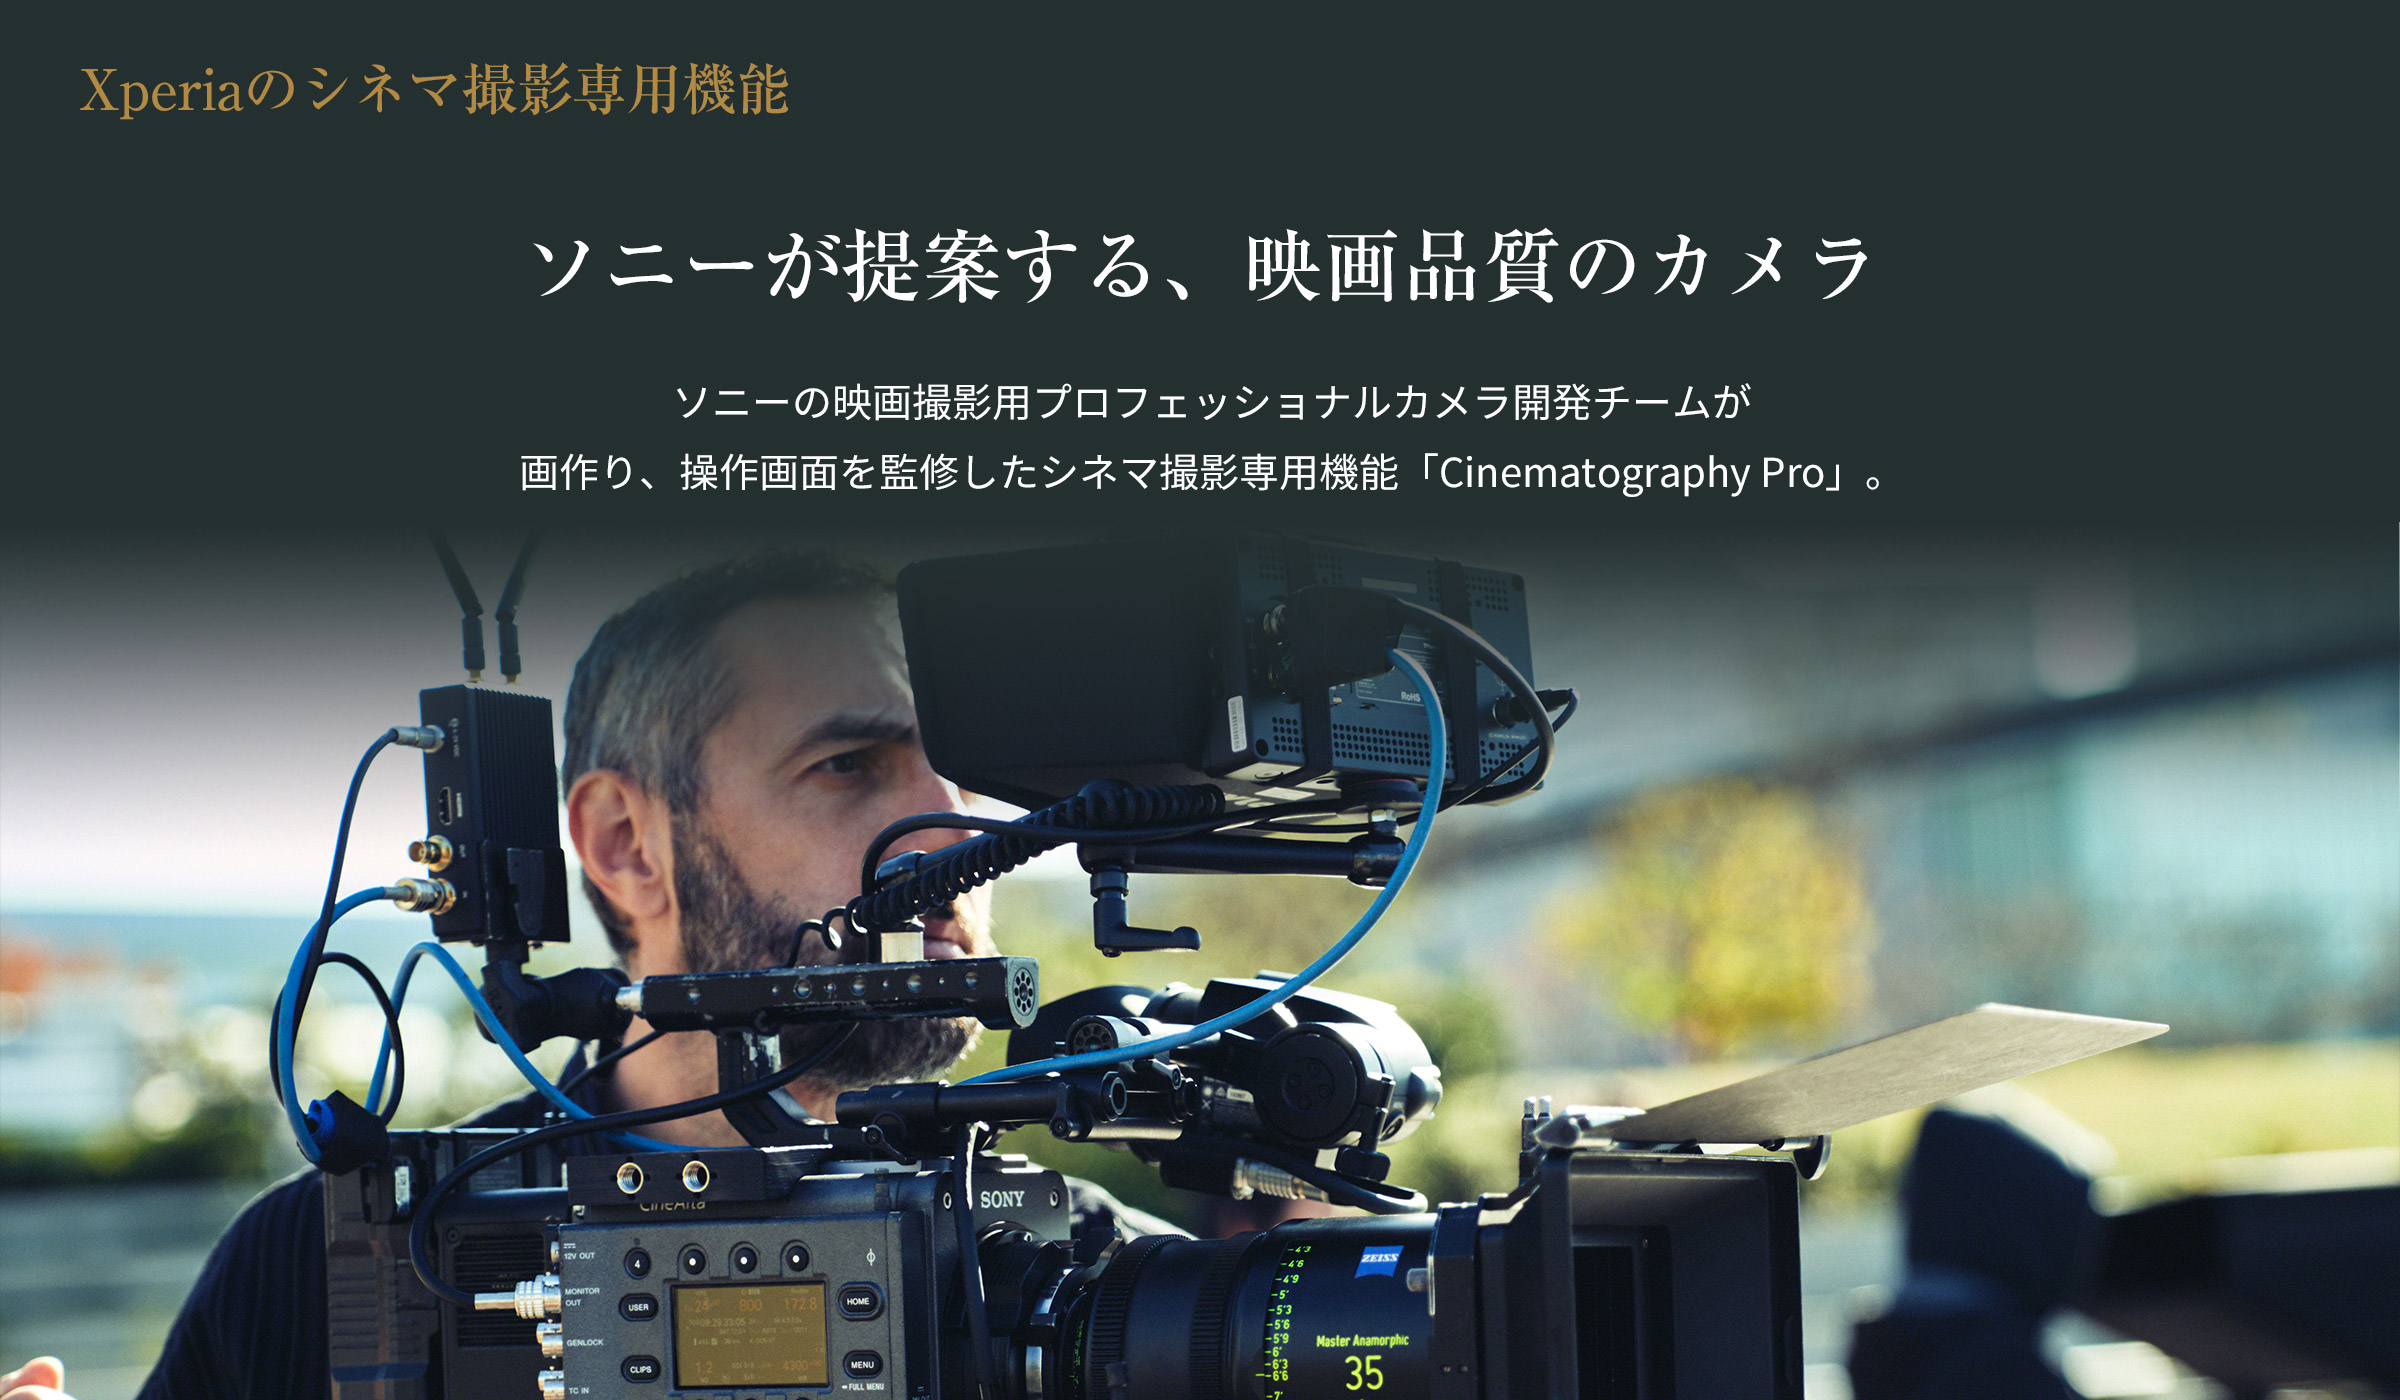 Xperiaのシネマ撮影専用機能 ソニーが提案する、映画品質のカメラ ソニーの映画撮影用プロフェッショナルカメラ開発チームが画作り、操作画面を監修したシネマ撮影専用機能「Cinematography Pro」。